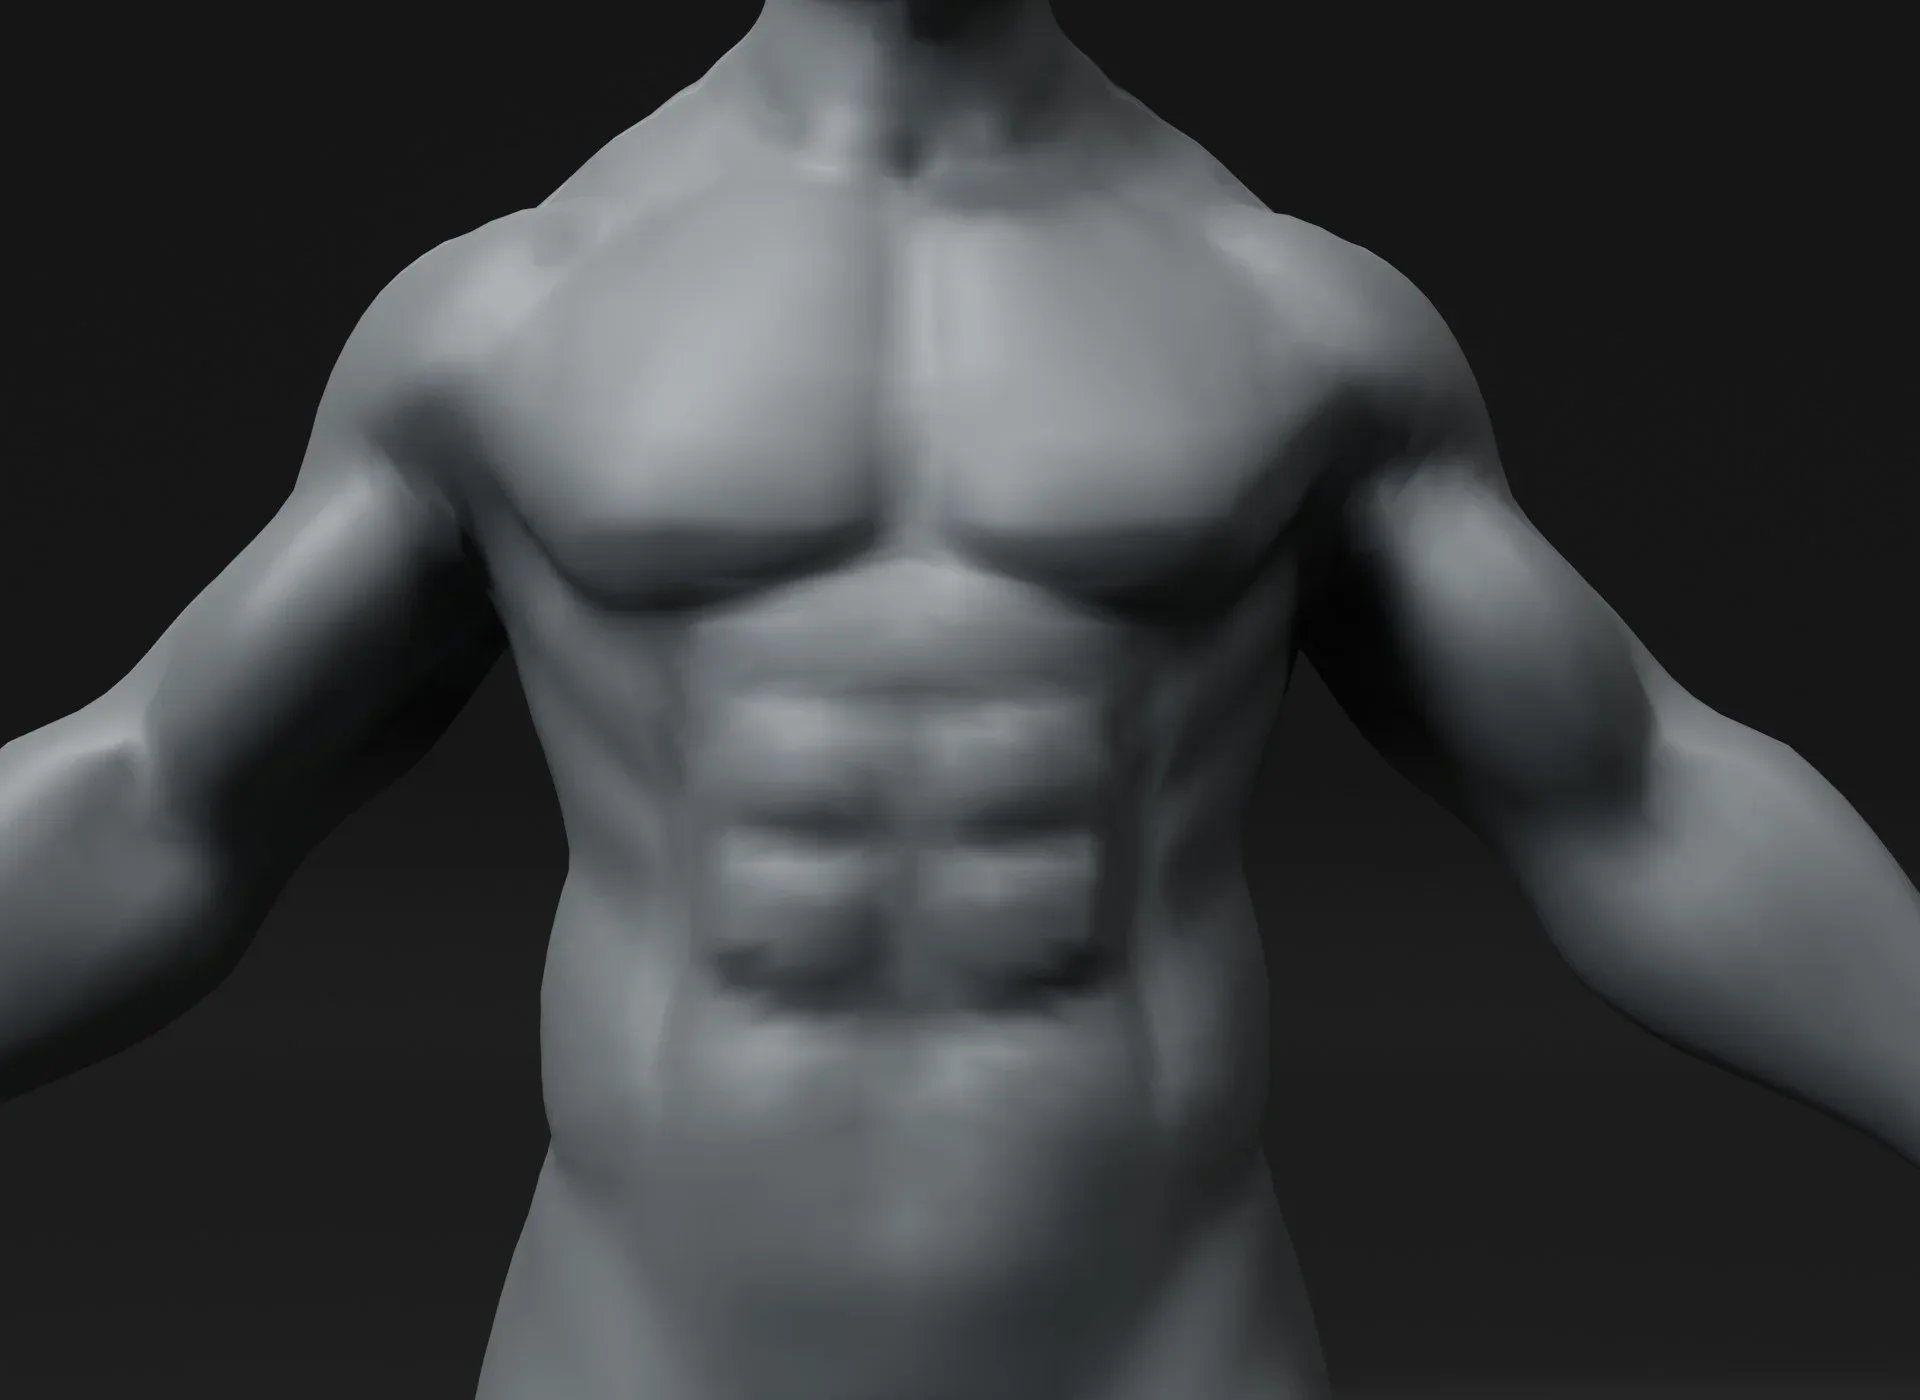 Superhero Male Body Base Mesh 3D Model 20k Polygons